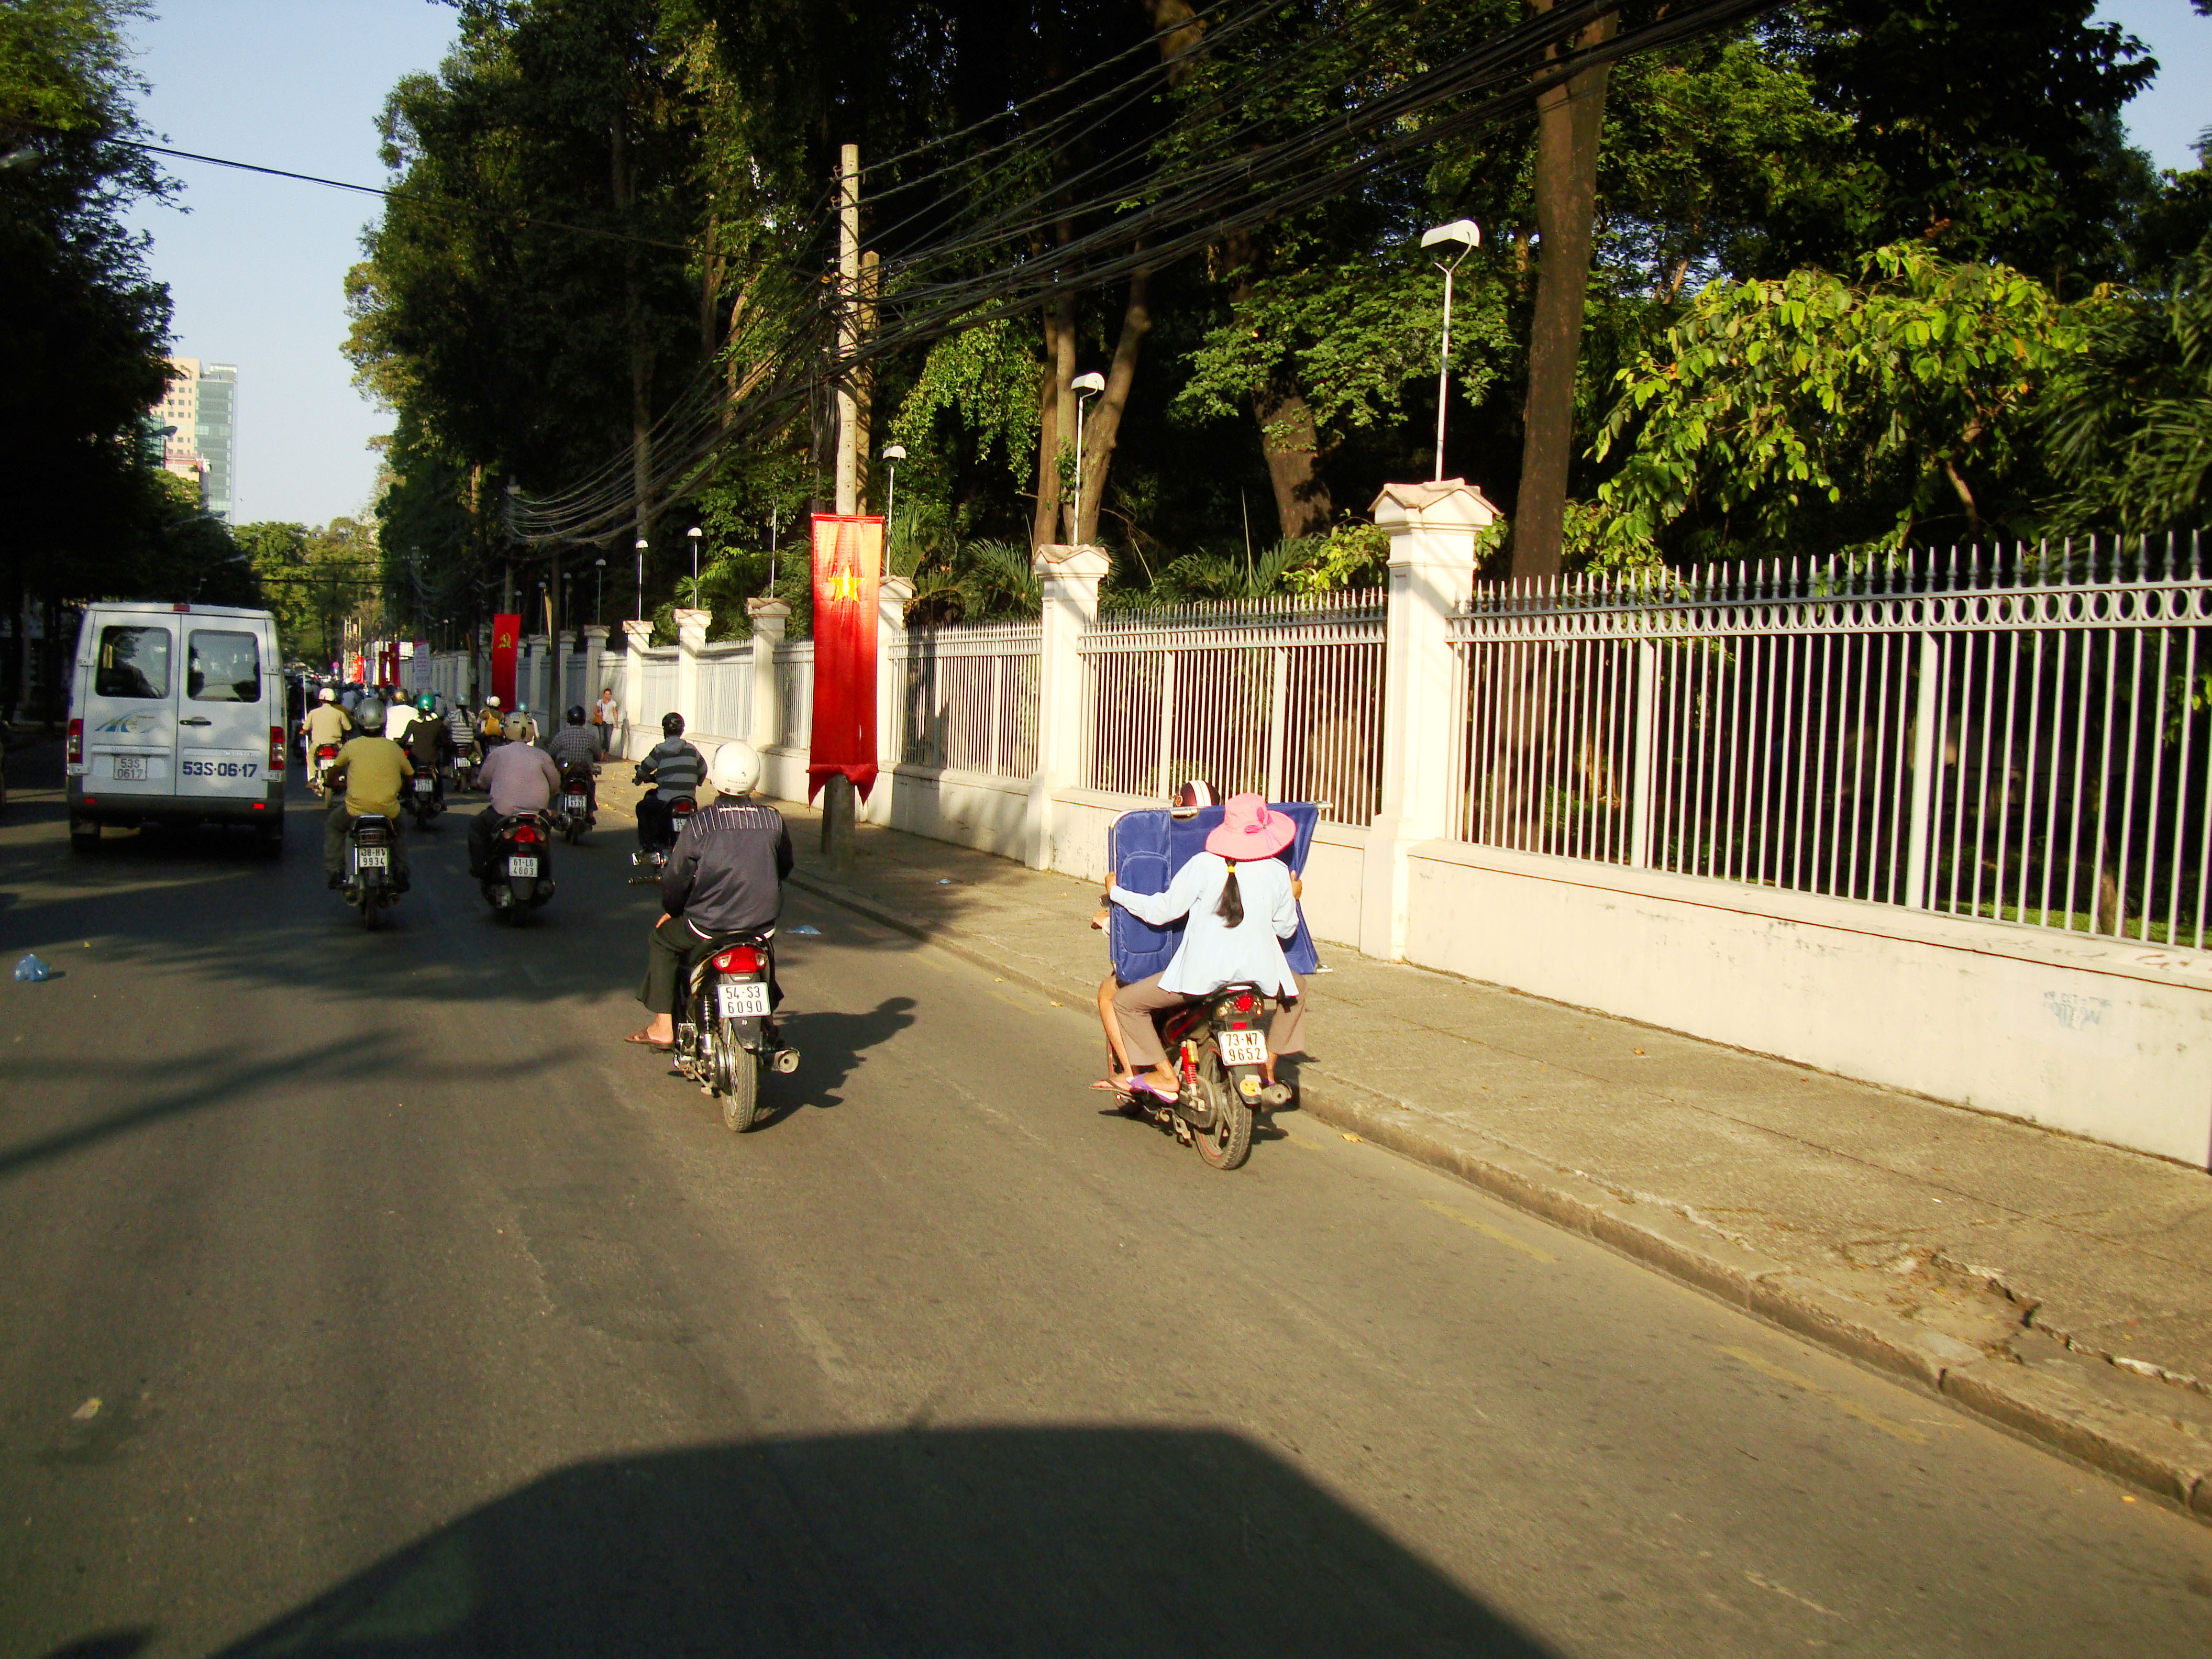 Vietnam HCMC Saigon street scenes everyday life Nov 2009 13